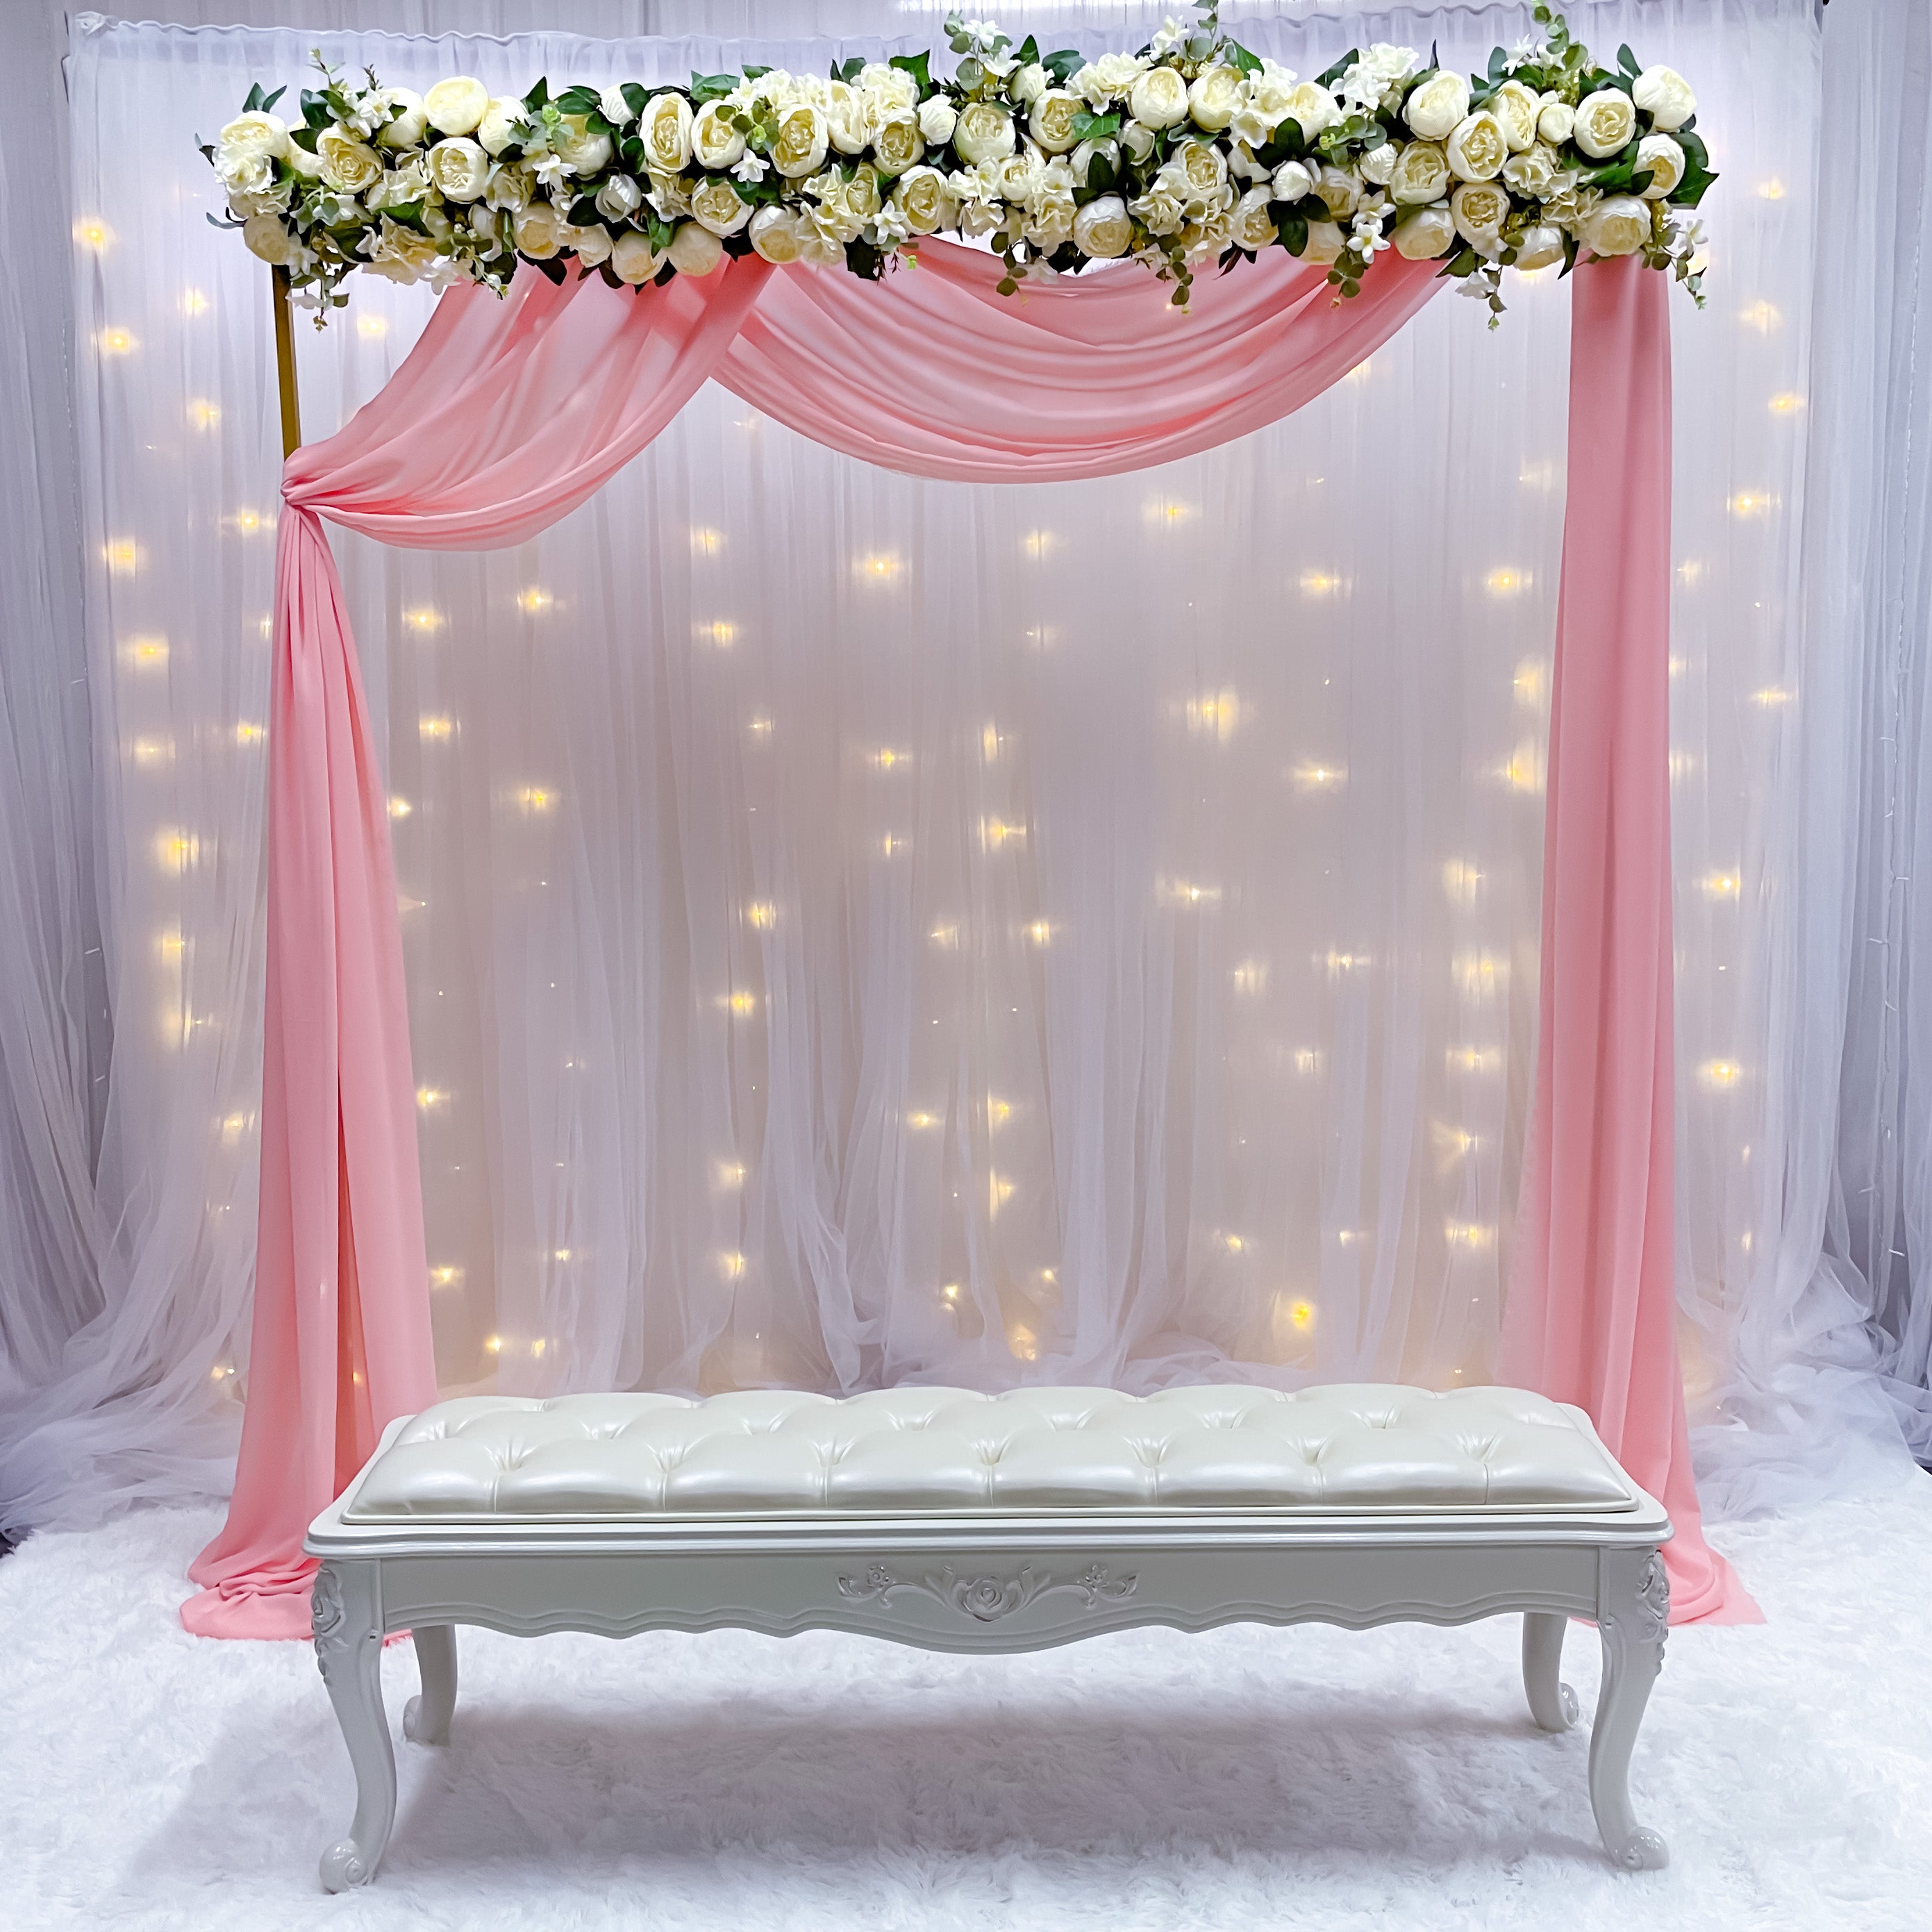 Mini Pelamin/ Mini Dias Decor for Malay Wedding at Home in Singapore - Pink & White Theme with Fairylights